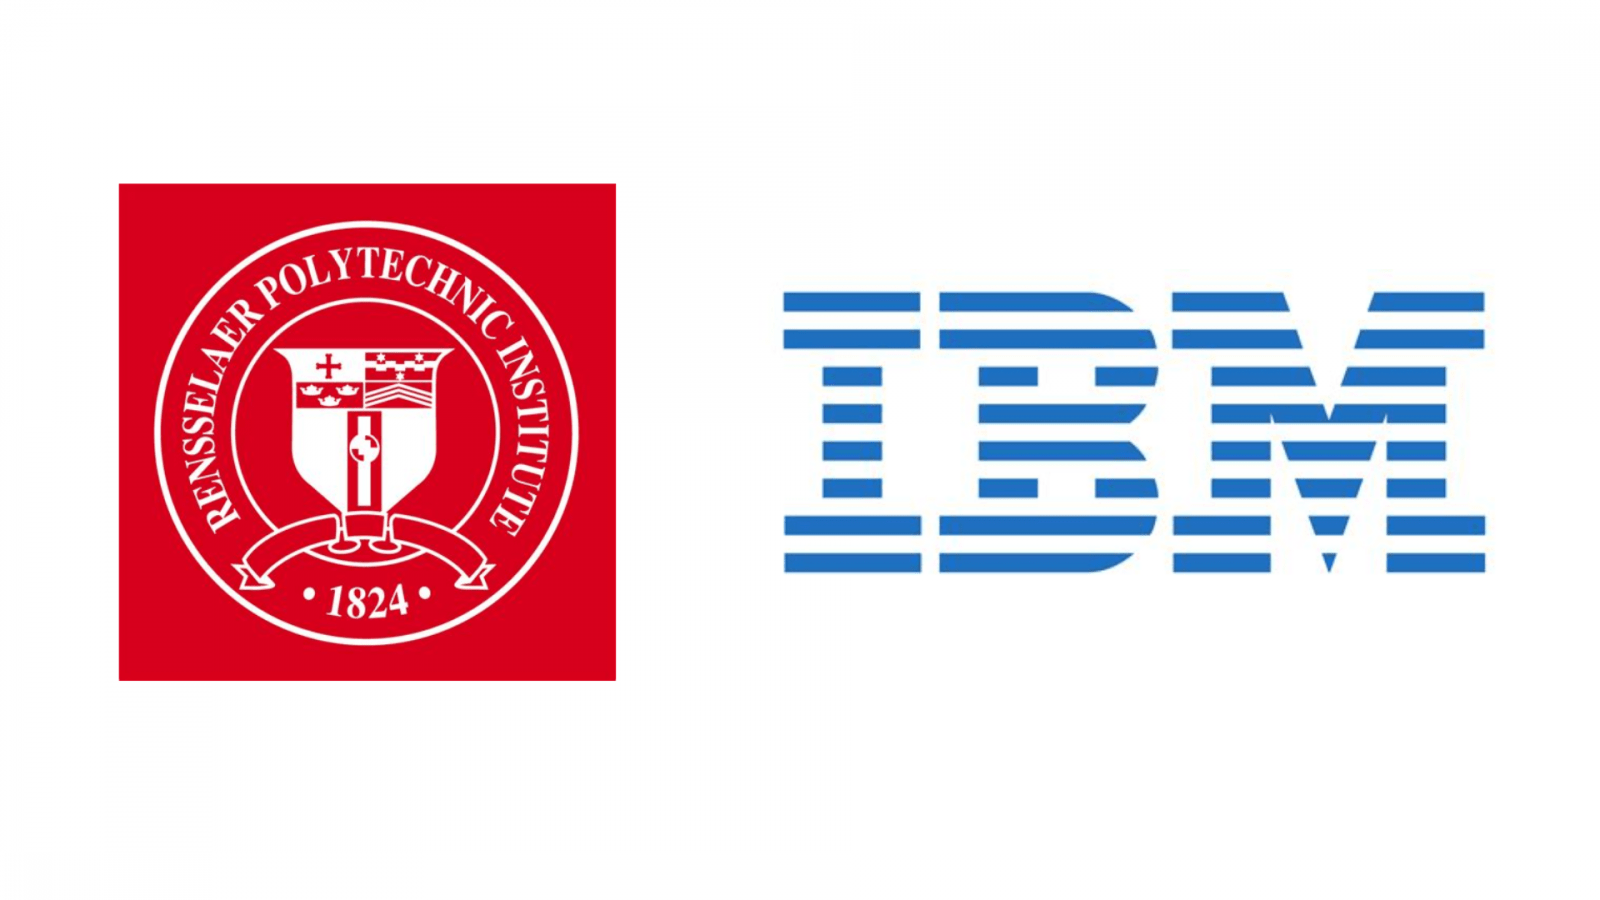 Rensselaer Polytechnic Institute (RPI) اور IBM نے یونیورسٹی کے کیمپس میں دنیا کے پہلے IBM کوانٹم سسٹم ون کی نقاب کشائی کی - Inside Quantum Technology